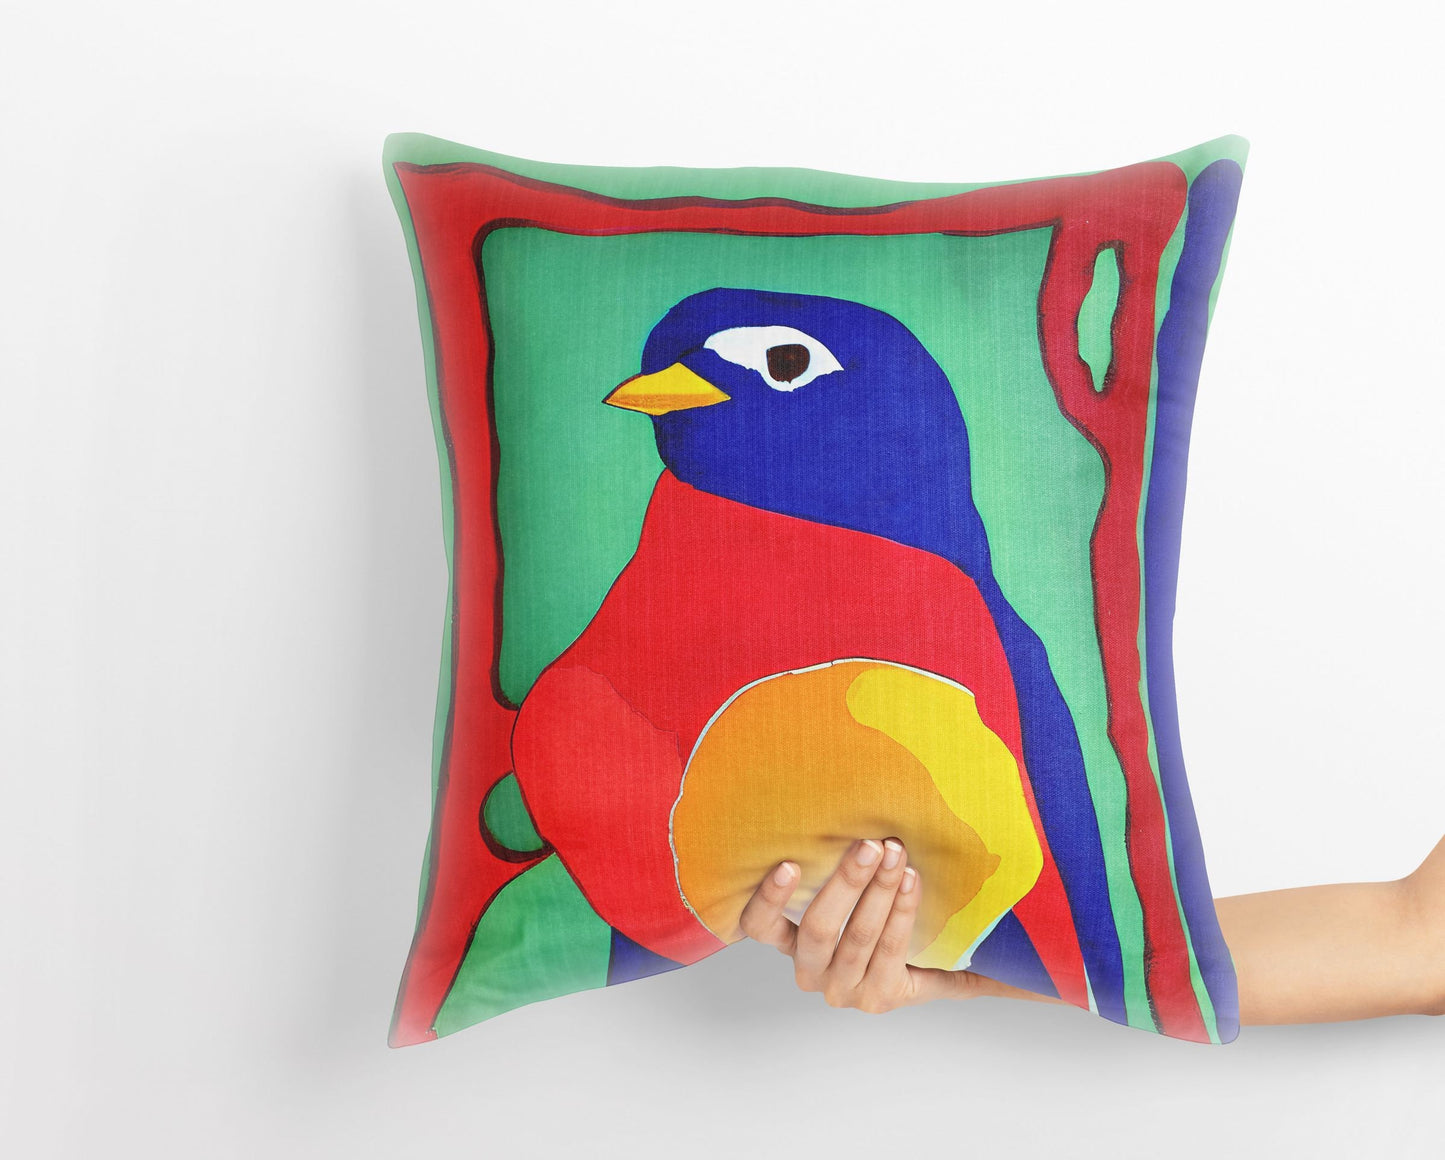 Red Bird Throw Pillow Cover, Abstract Throw Pillow, Artist Pillow, Colorful Pillow Case, Contemporary Pillow, Square Pillow